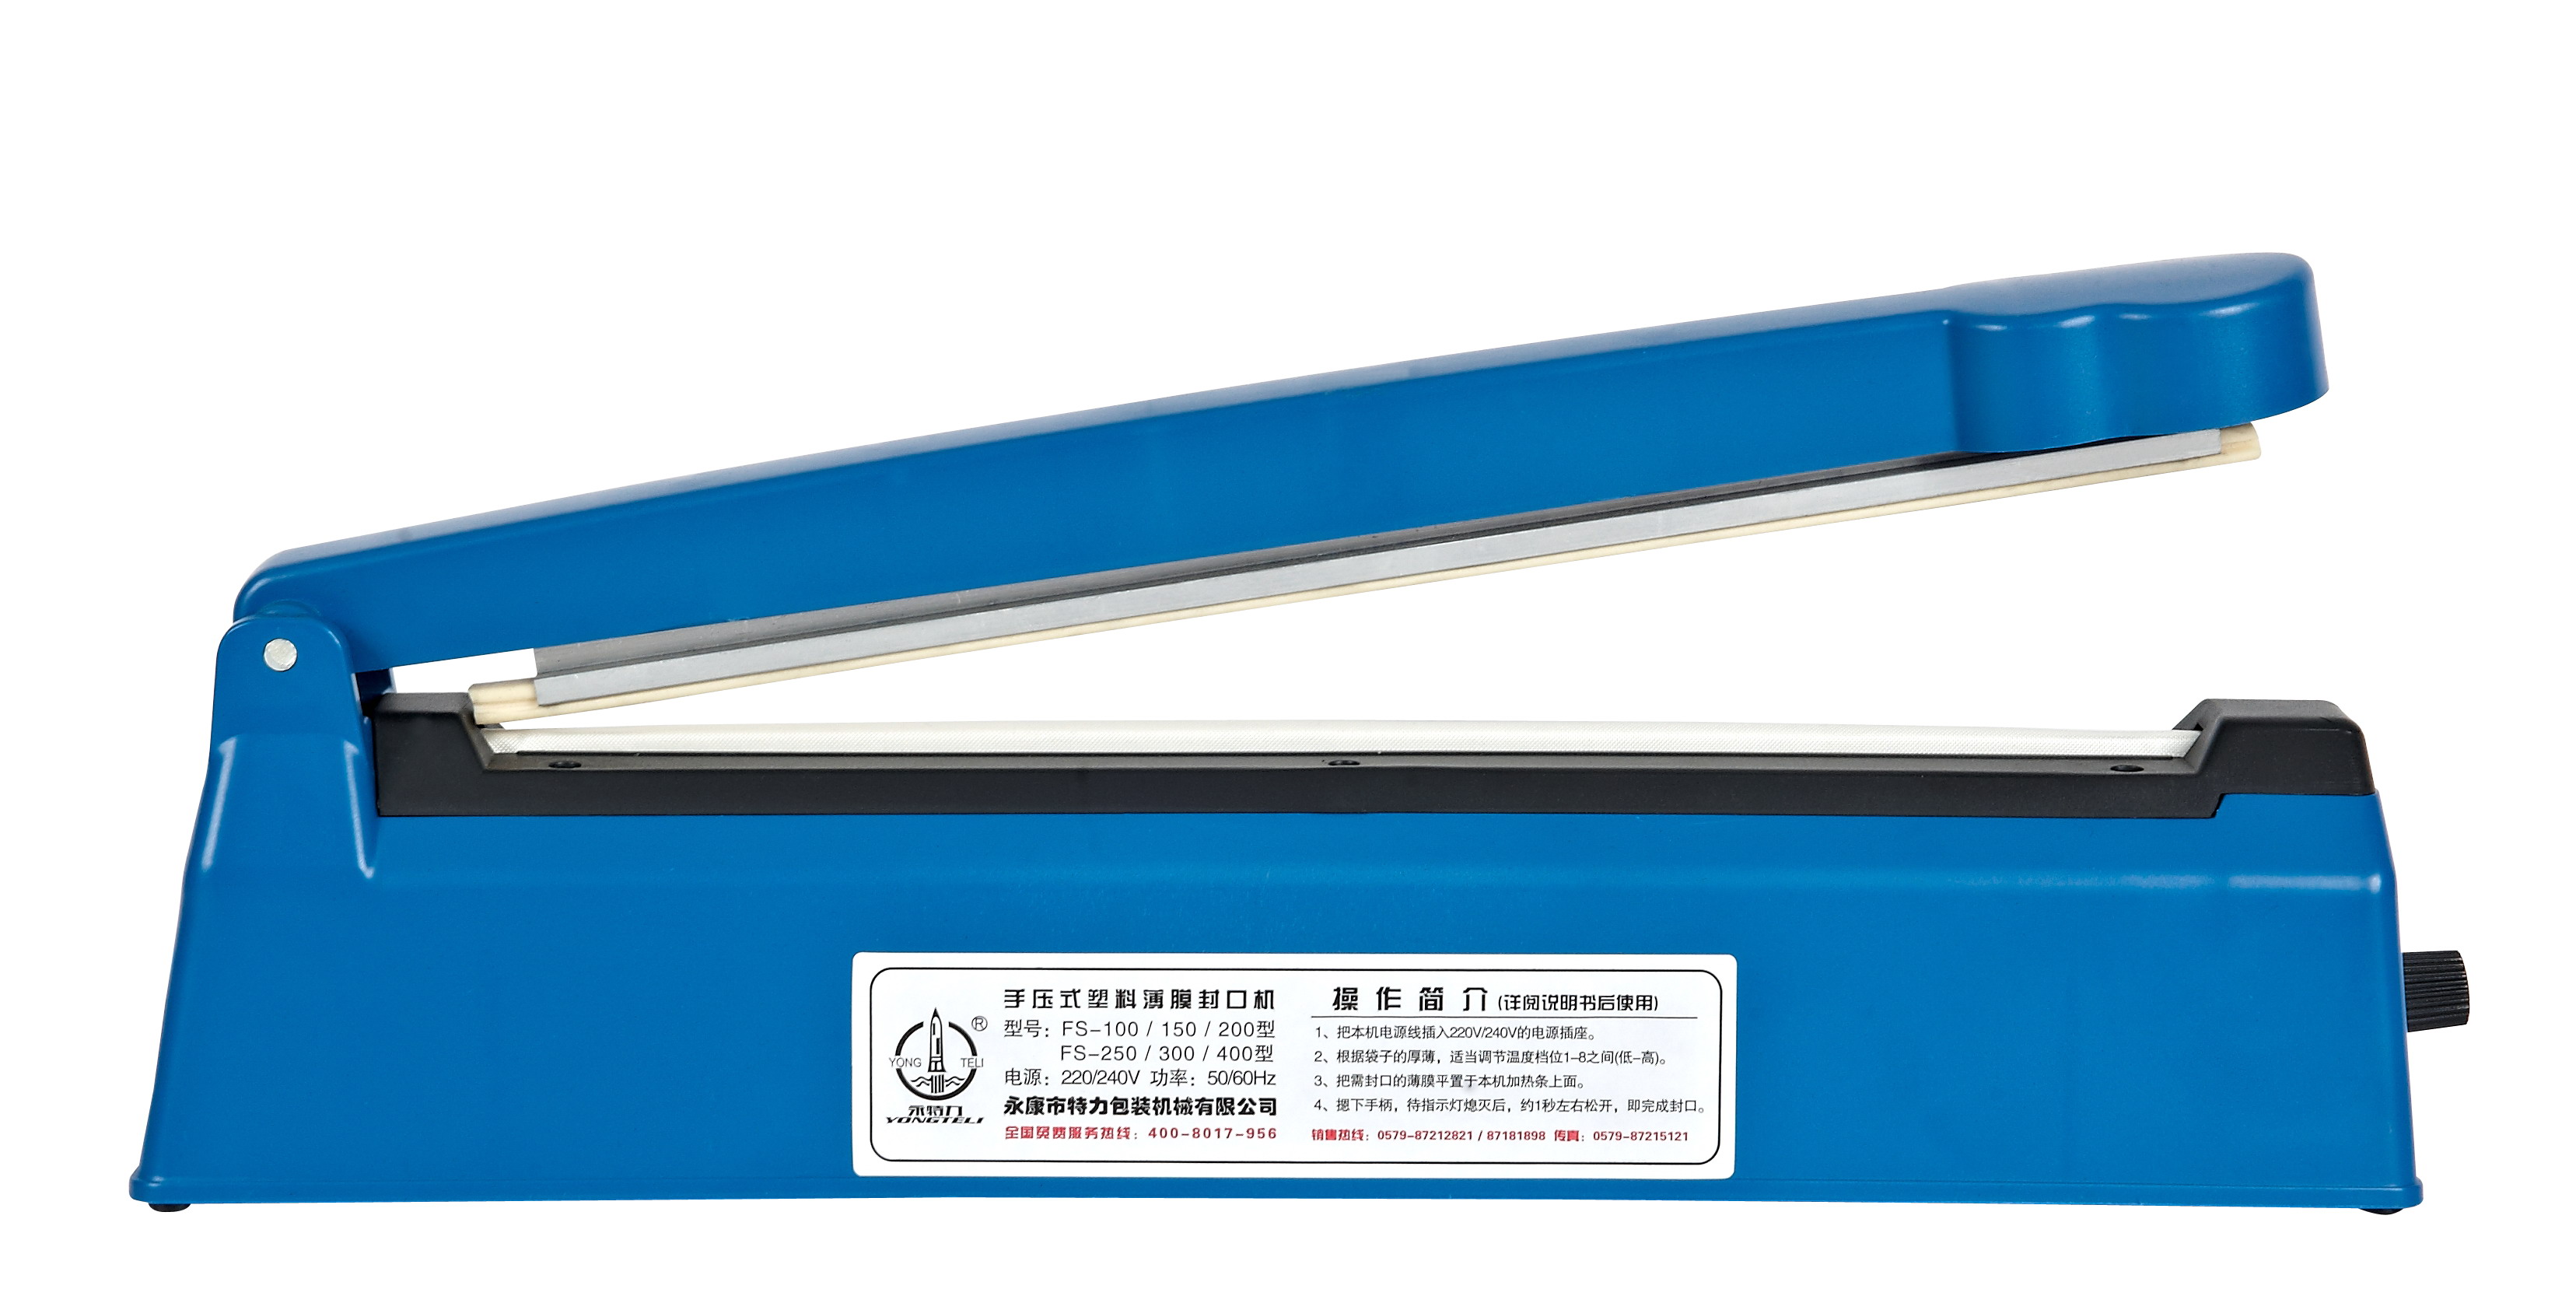 <b>Sealing Machine Hand Hald Heat Sealer Plastic Body PFS-250</b>